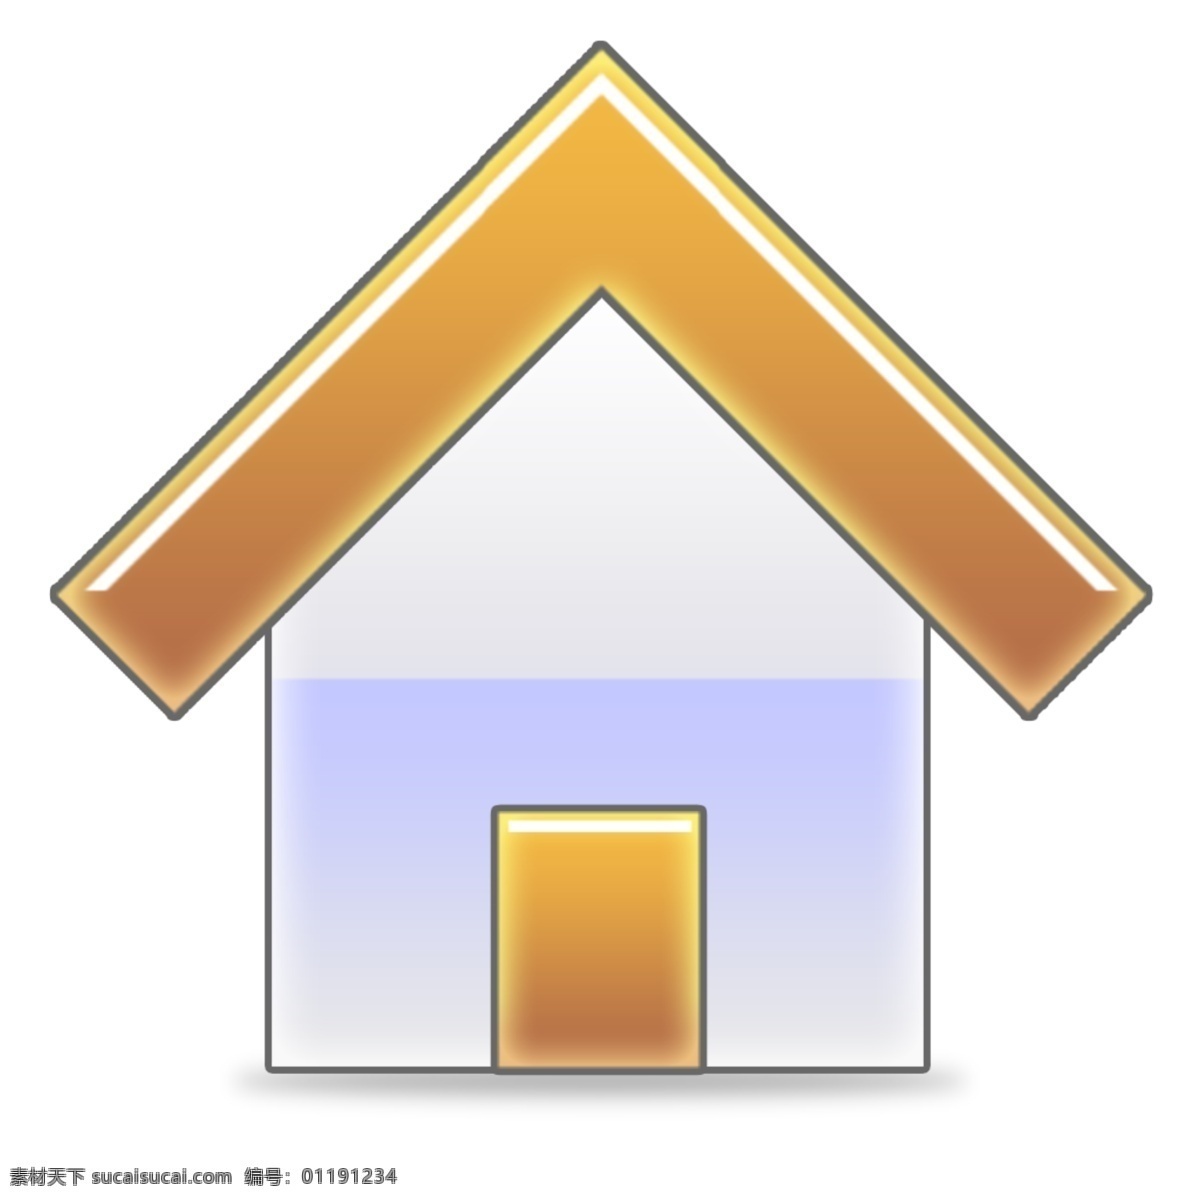 网页 彩色 房子 首页 icon 图标 图标设计 icon设计 icon图标 网页图标 房子图标 房子icon 首页图标 首页icon